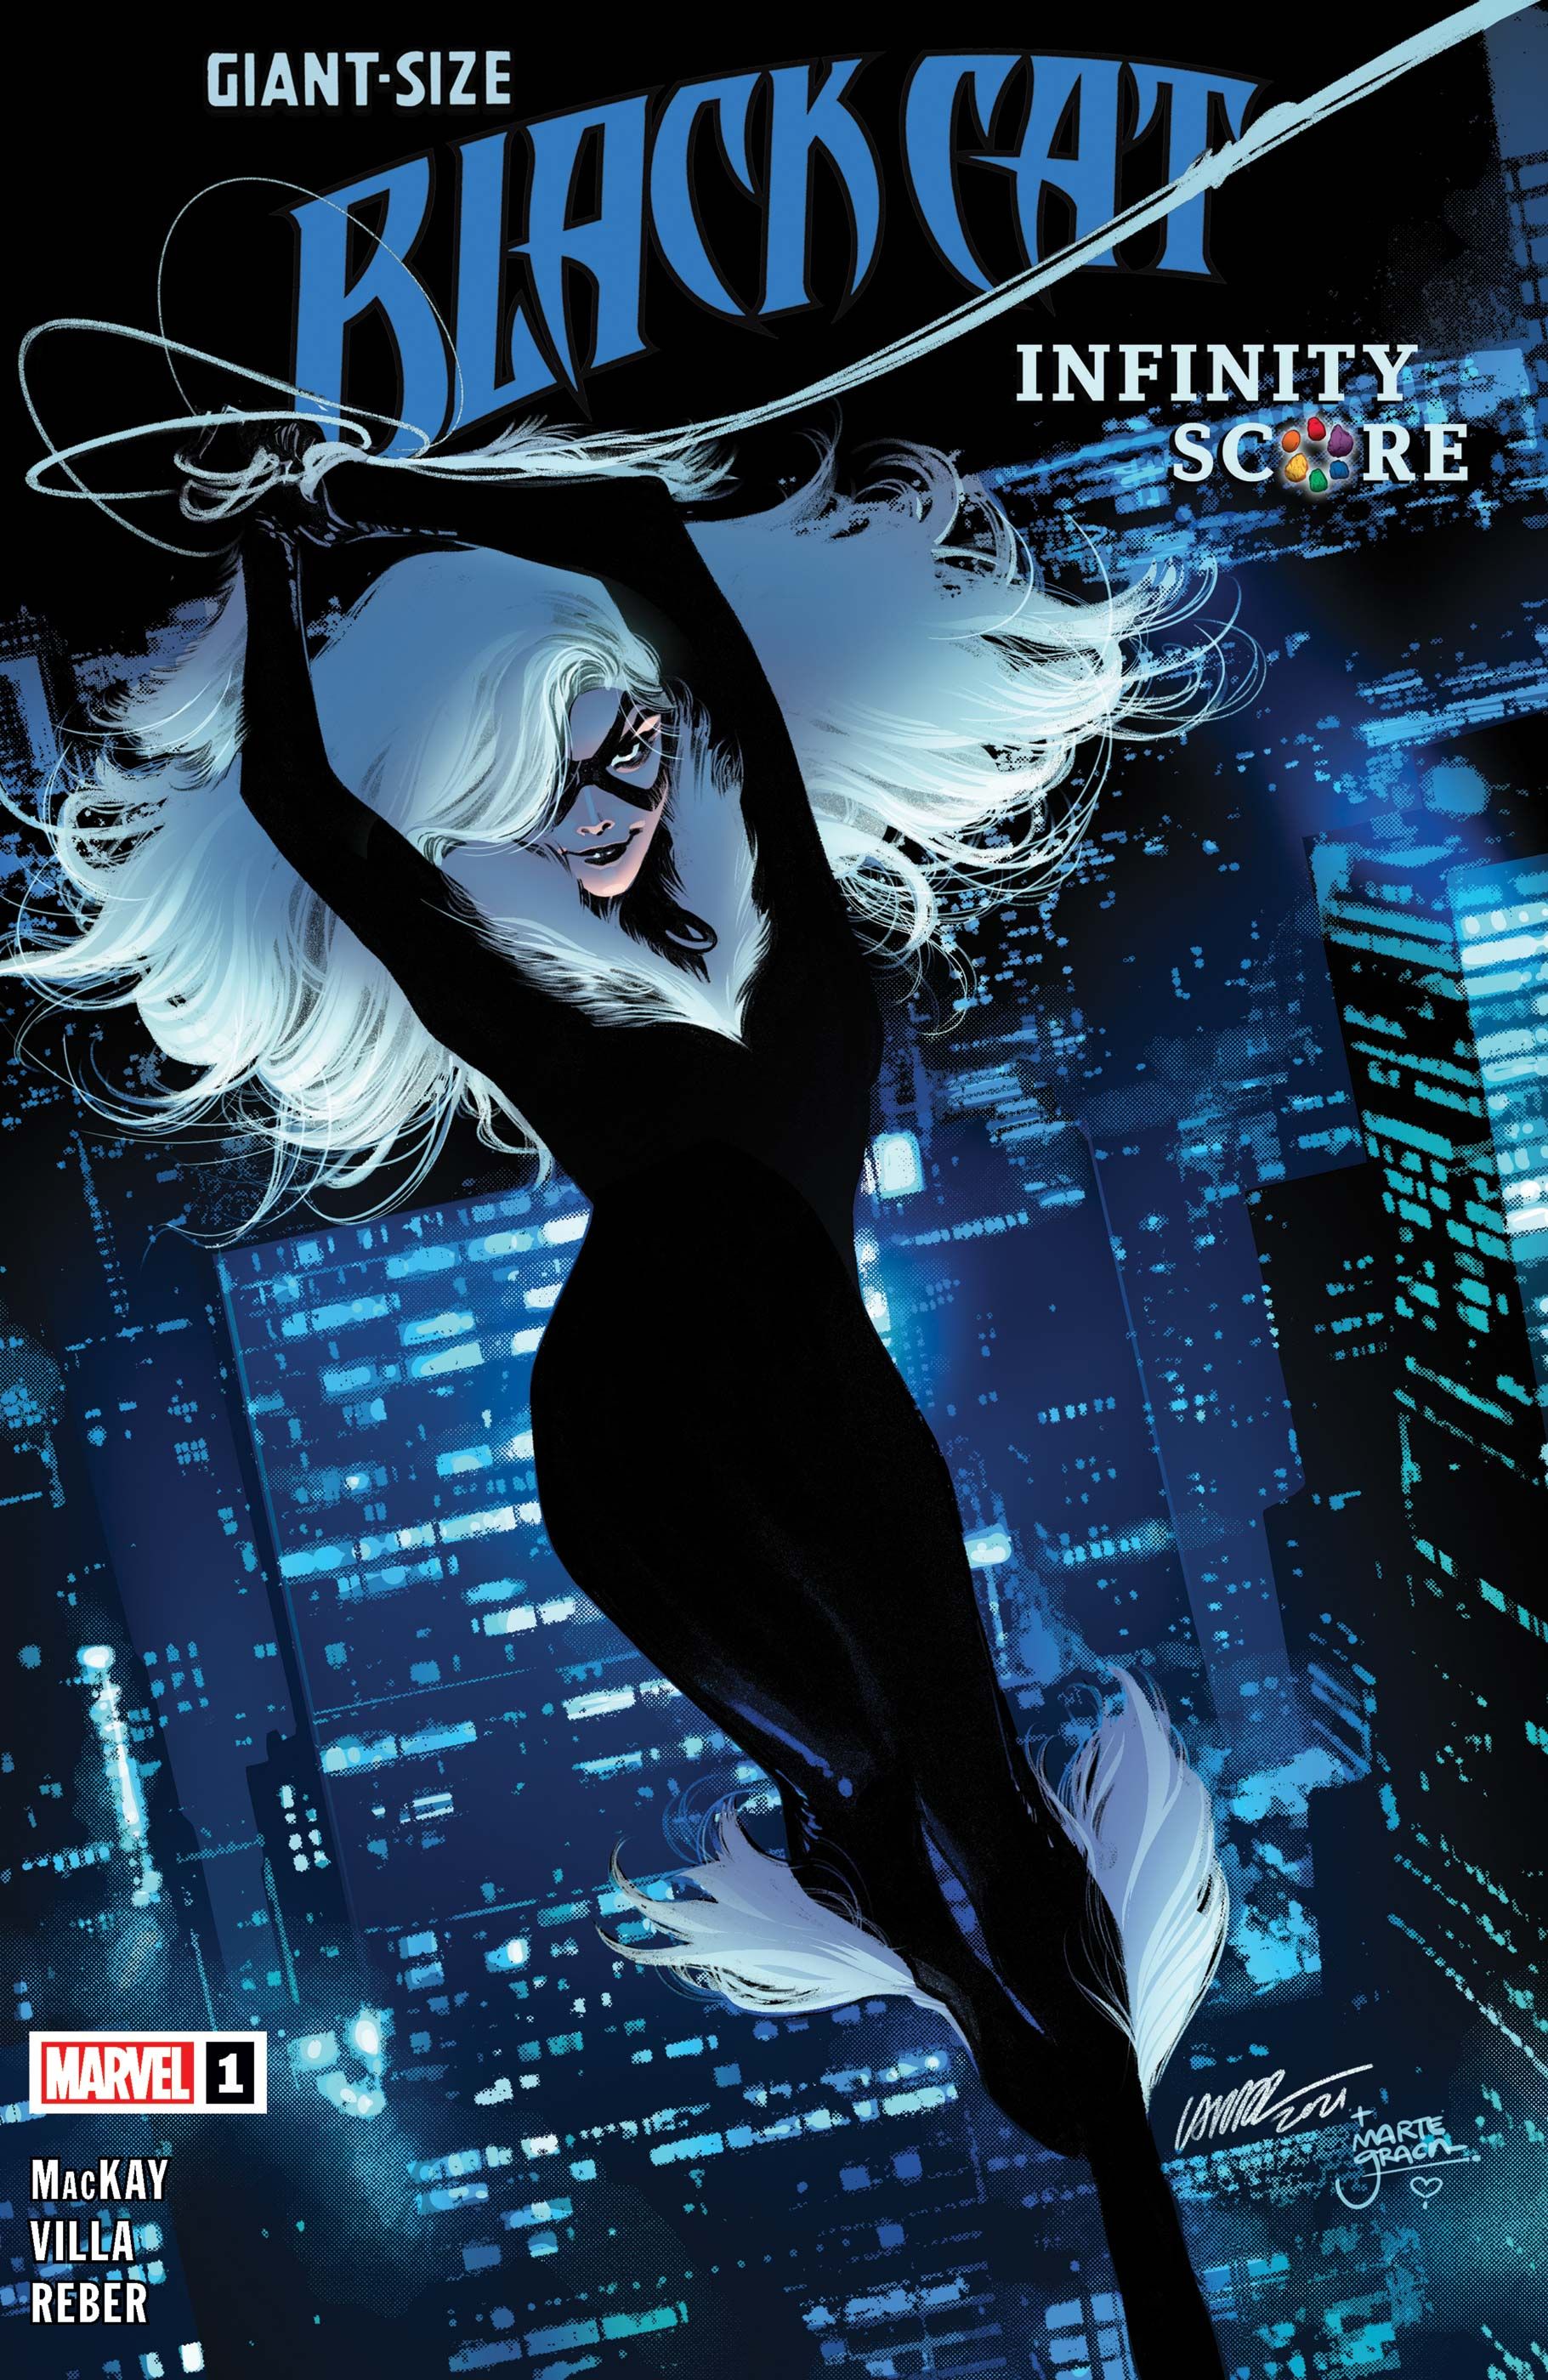 Marvels GiantSize Black Cat Infinity Score #1 Comic Review